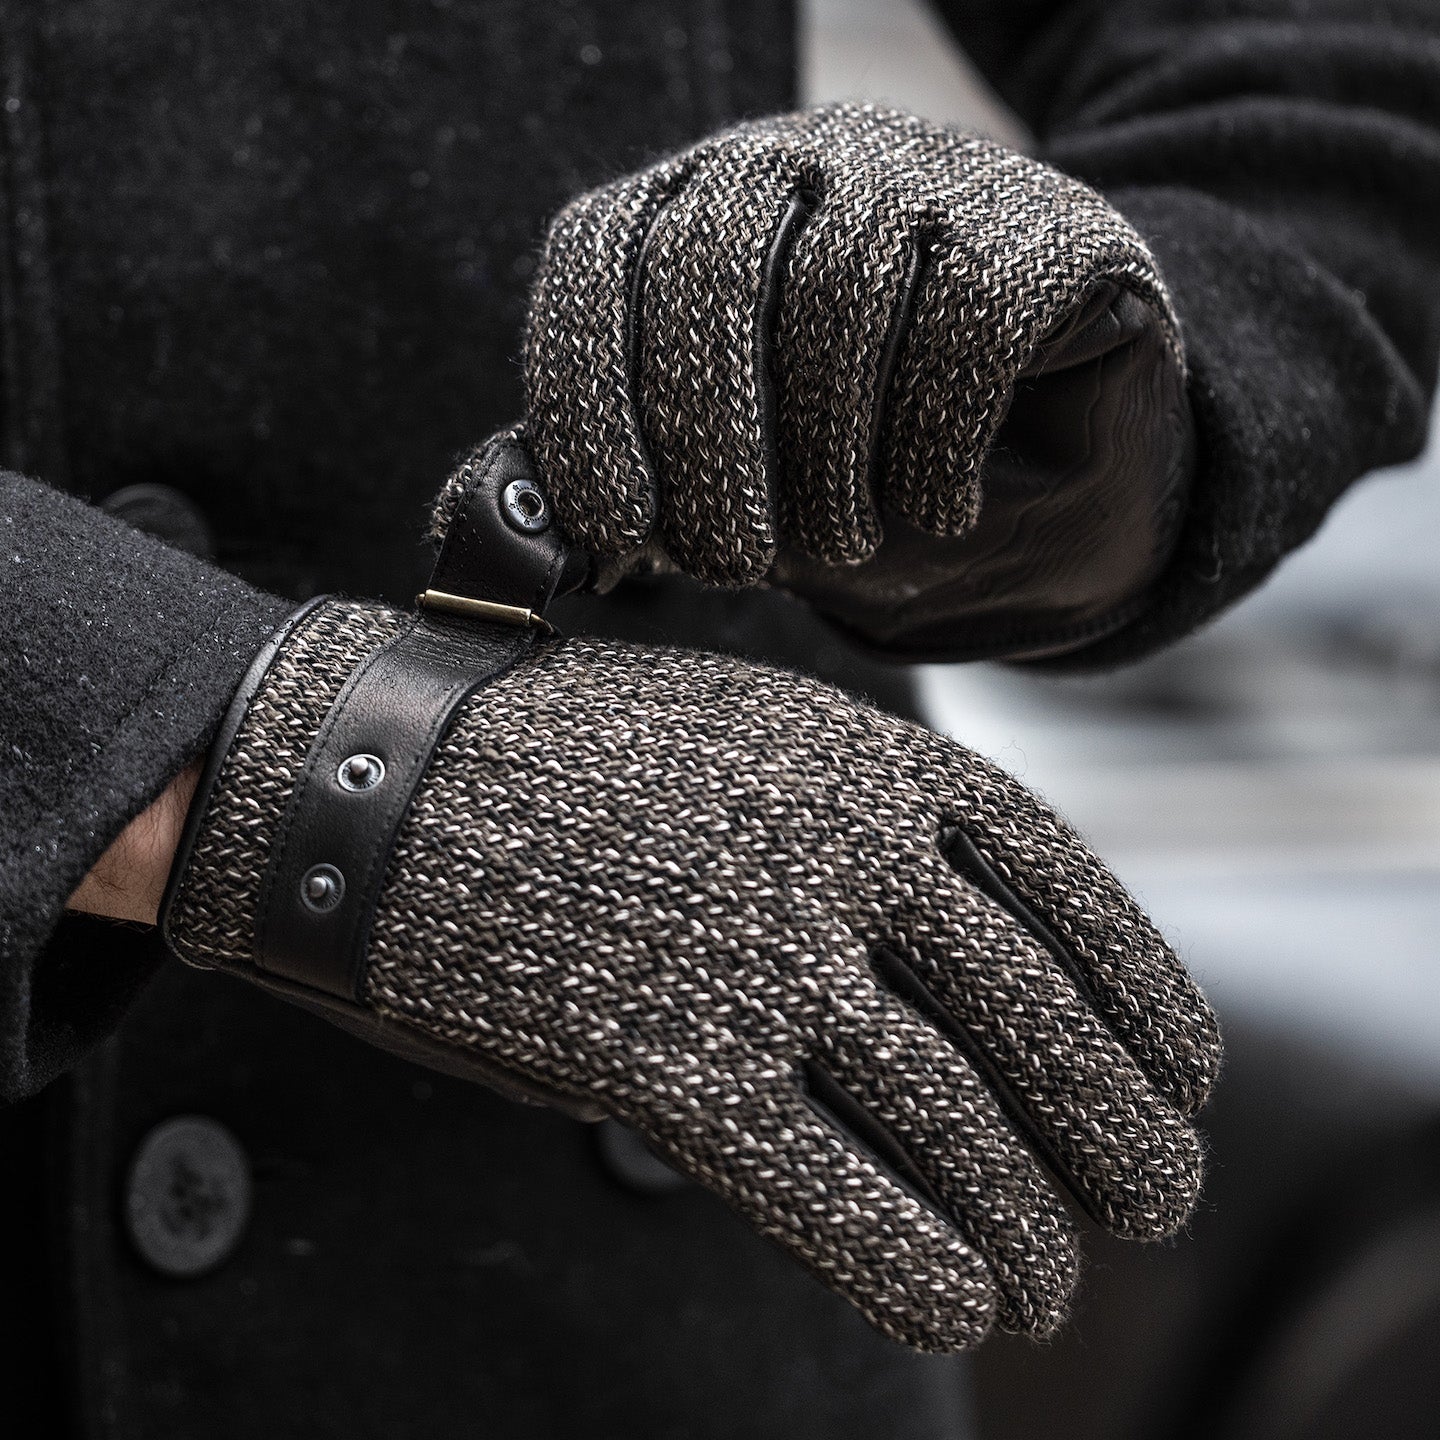 Intrepid BC - Triple Aught Design Collab' Gloves, Black